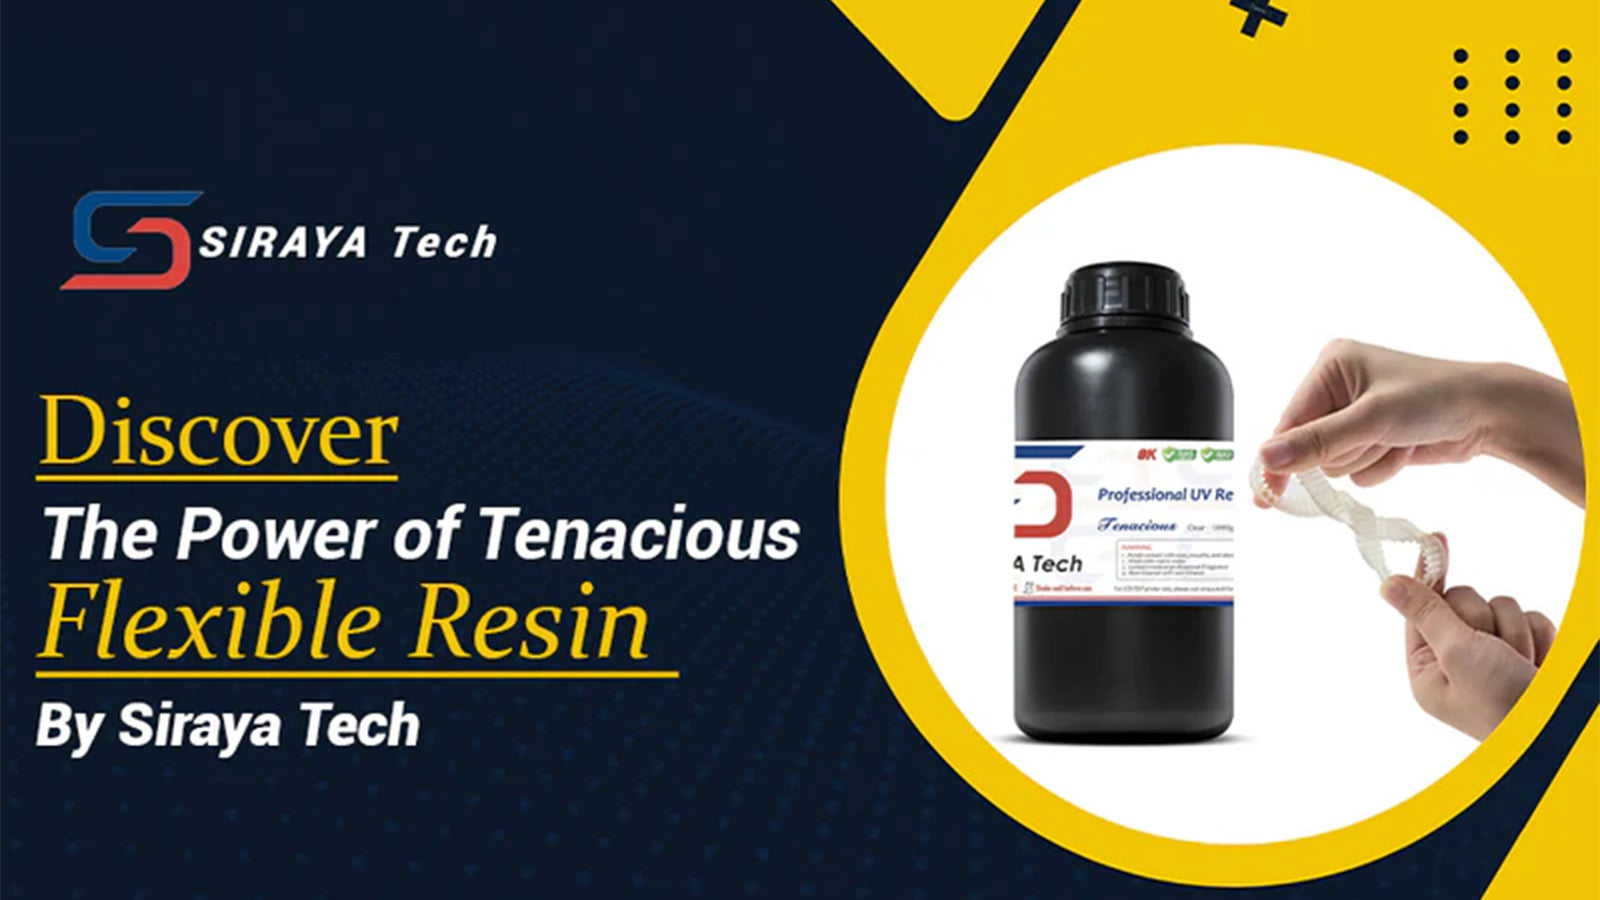 Discover the Power of Tenacious - Flexible Resin by Siraya Tech